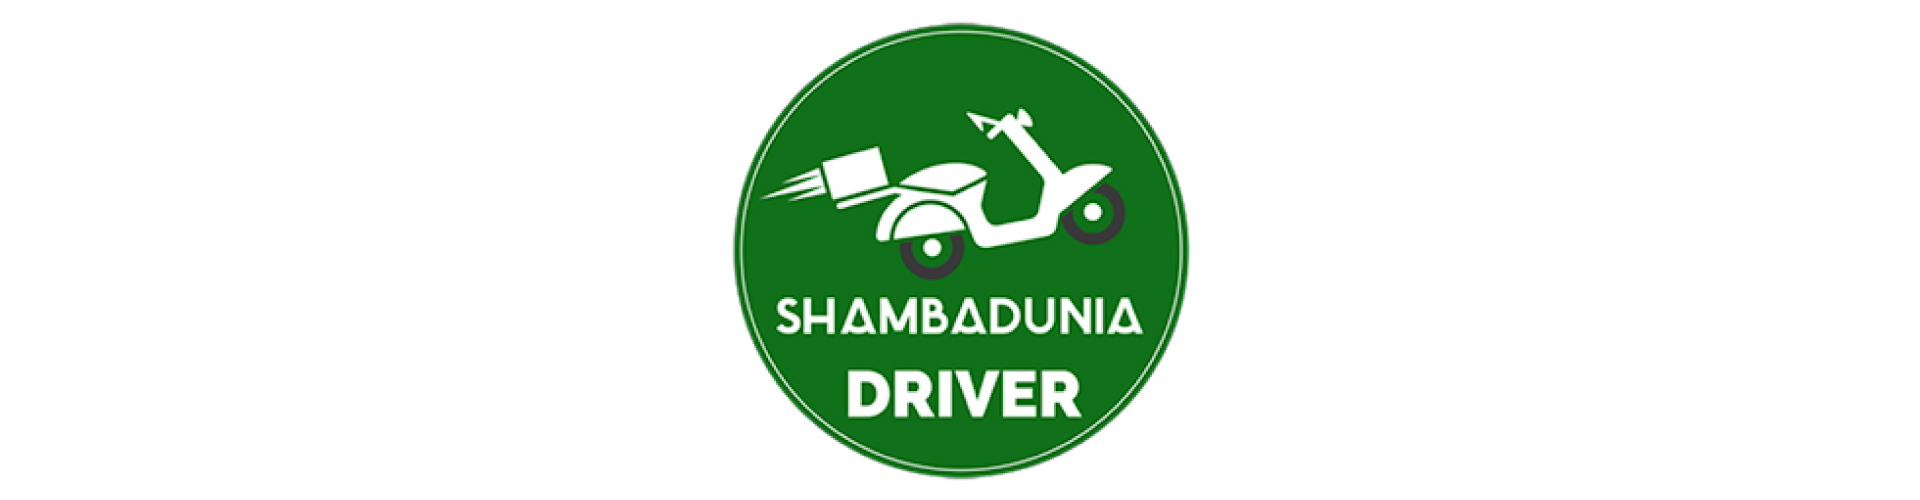 Shamba Dunia Logistics Solution (Driver App)